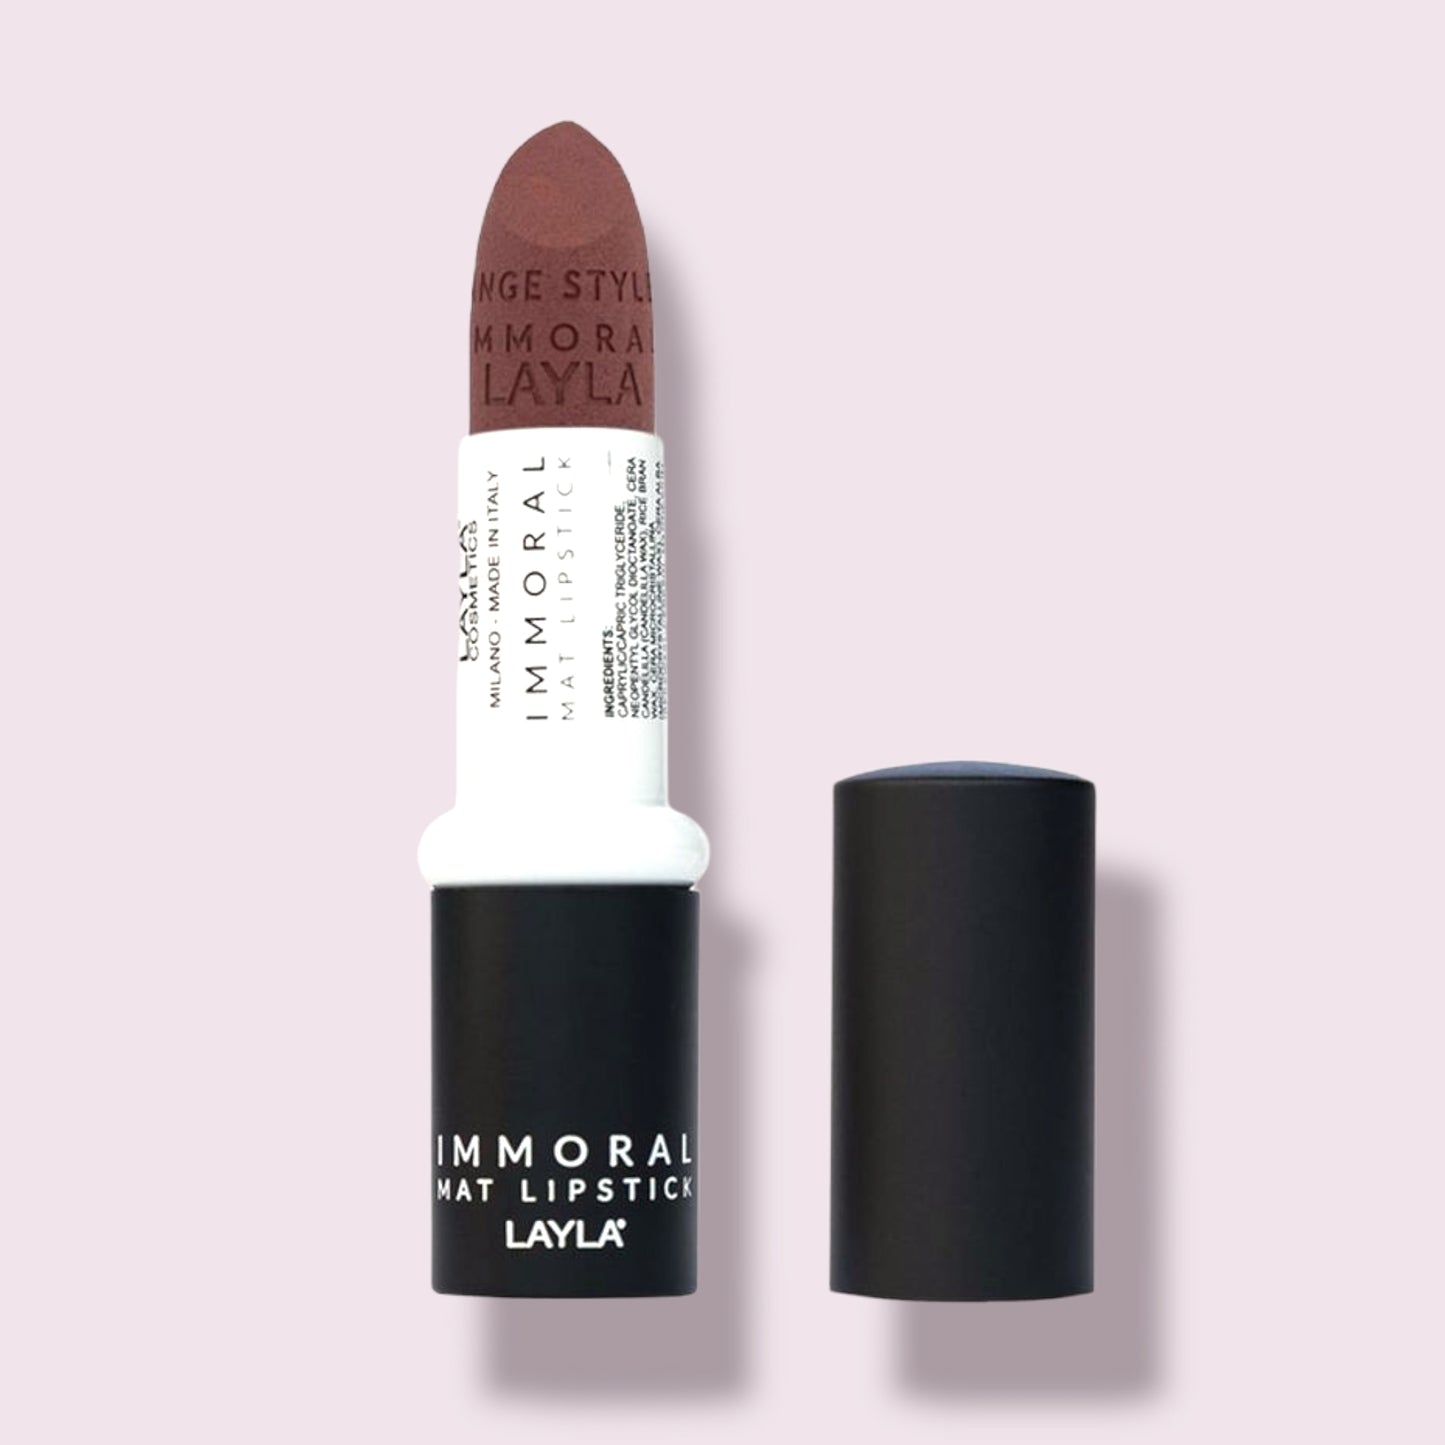 Immoral Mat Lipstick 19